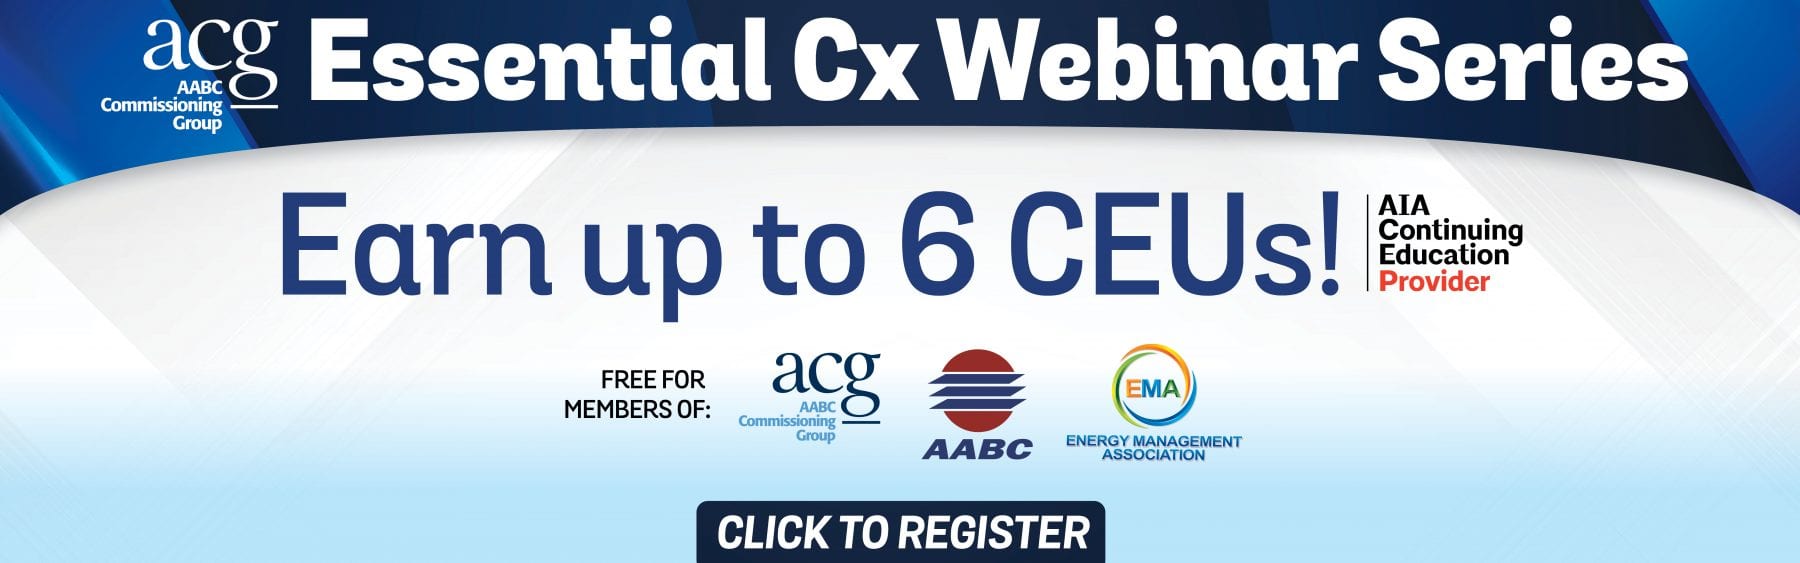 Essential Cx Webinar Series with ACG